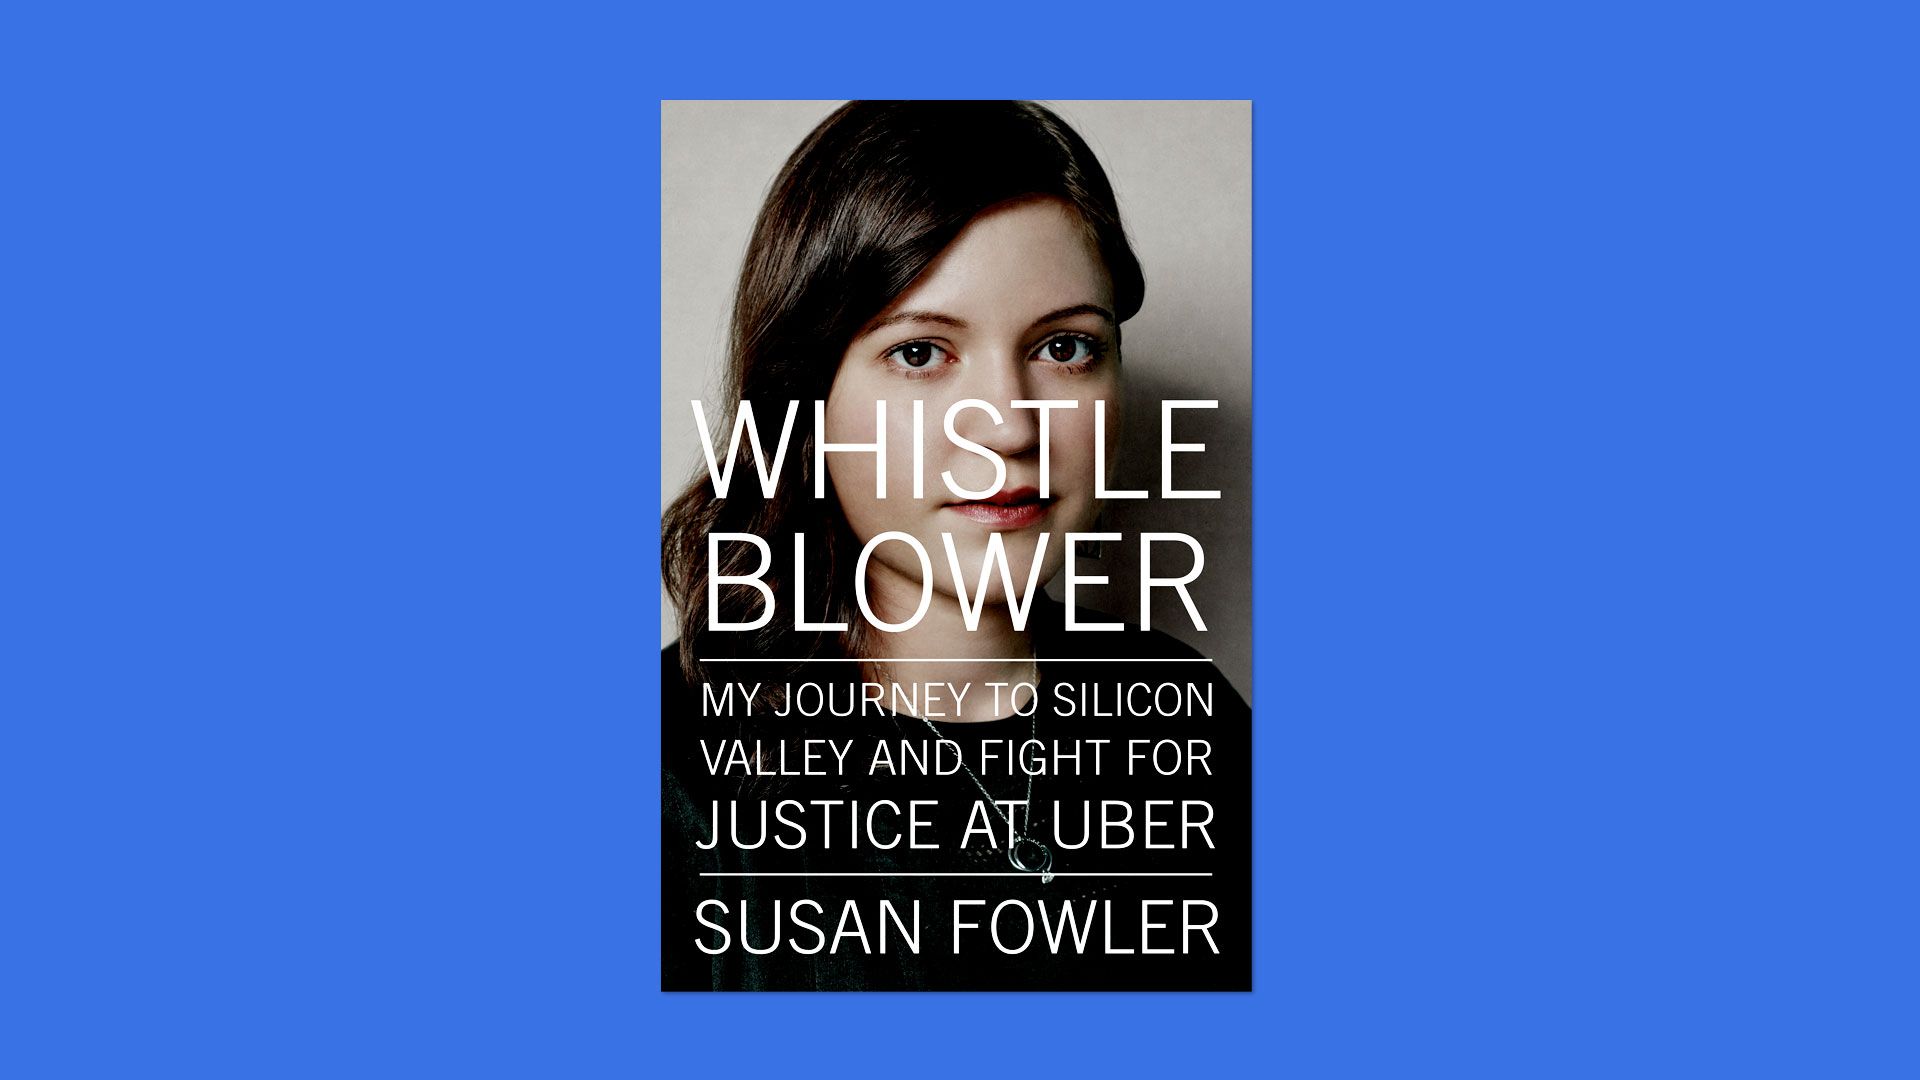 The "Whistleblower" cover